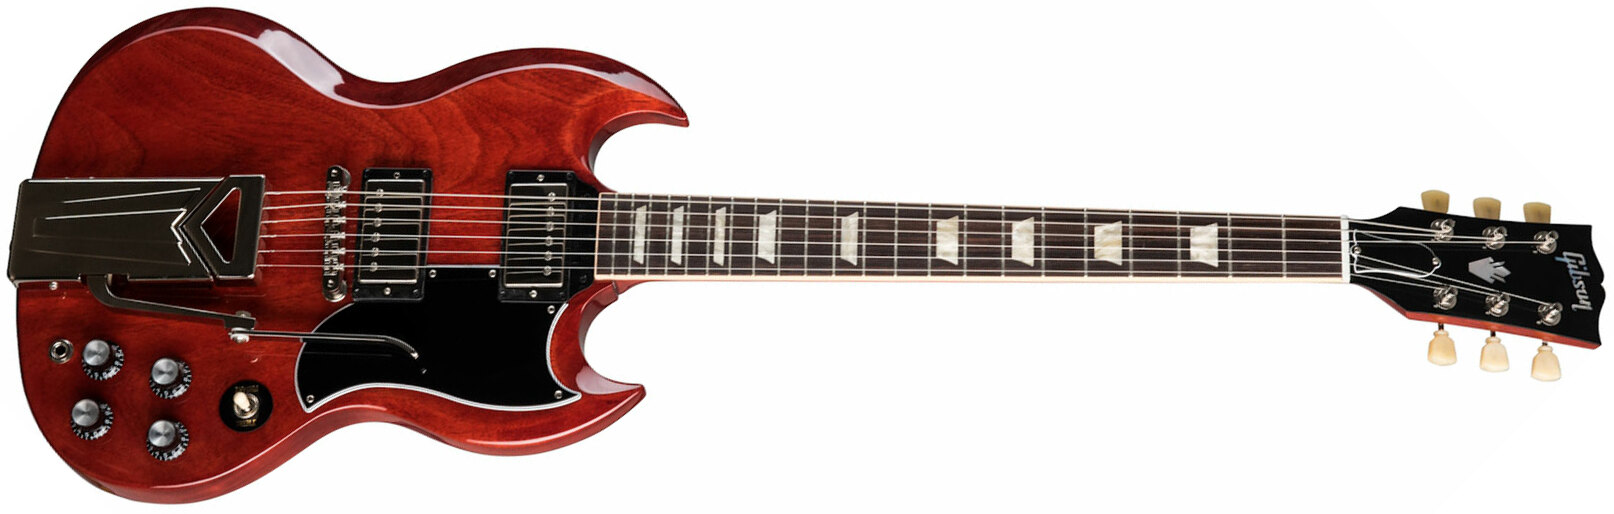 Gibson Sg Standard '61 Sideways Vibrola Original 2h Ht Rw - Vintage Cherry - Retro-Rock-E-Gitarre - Main picture